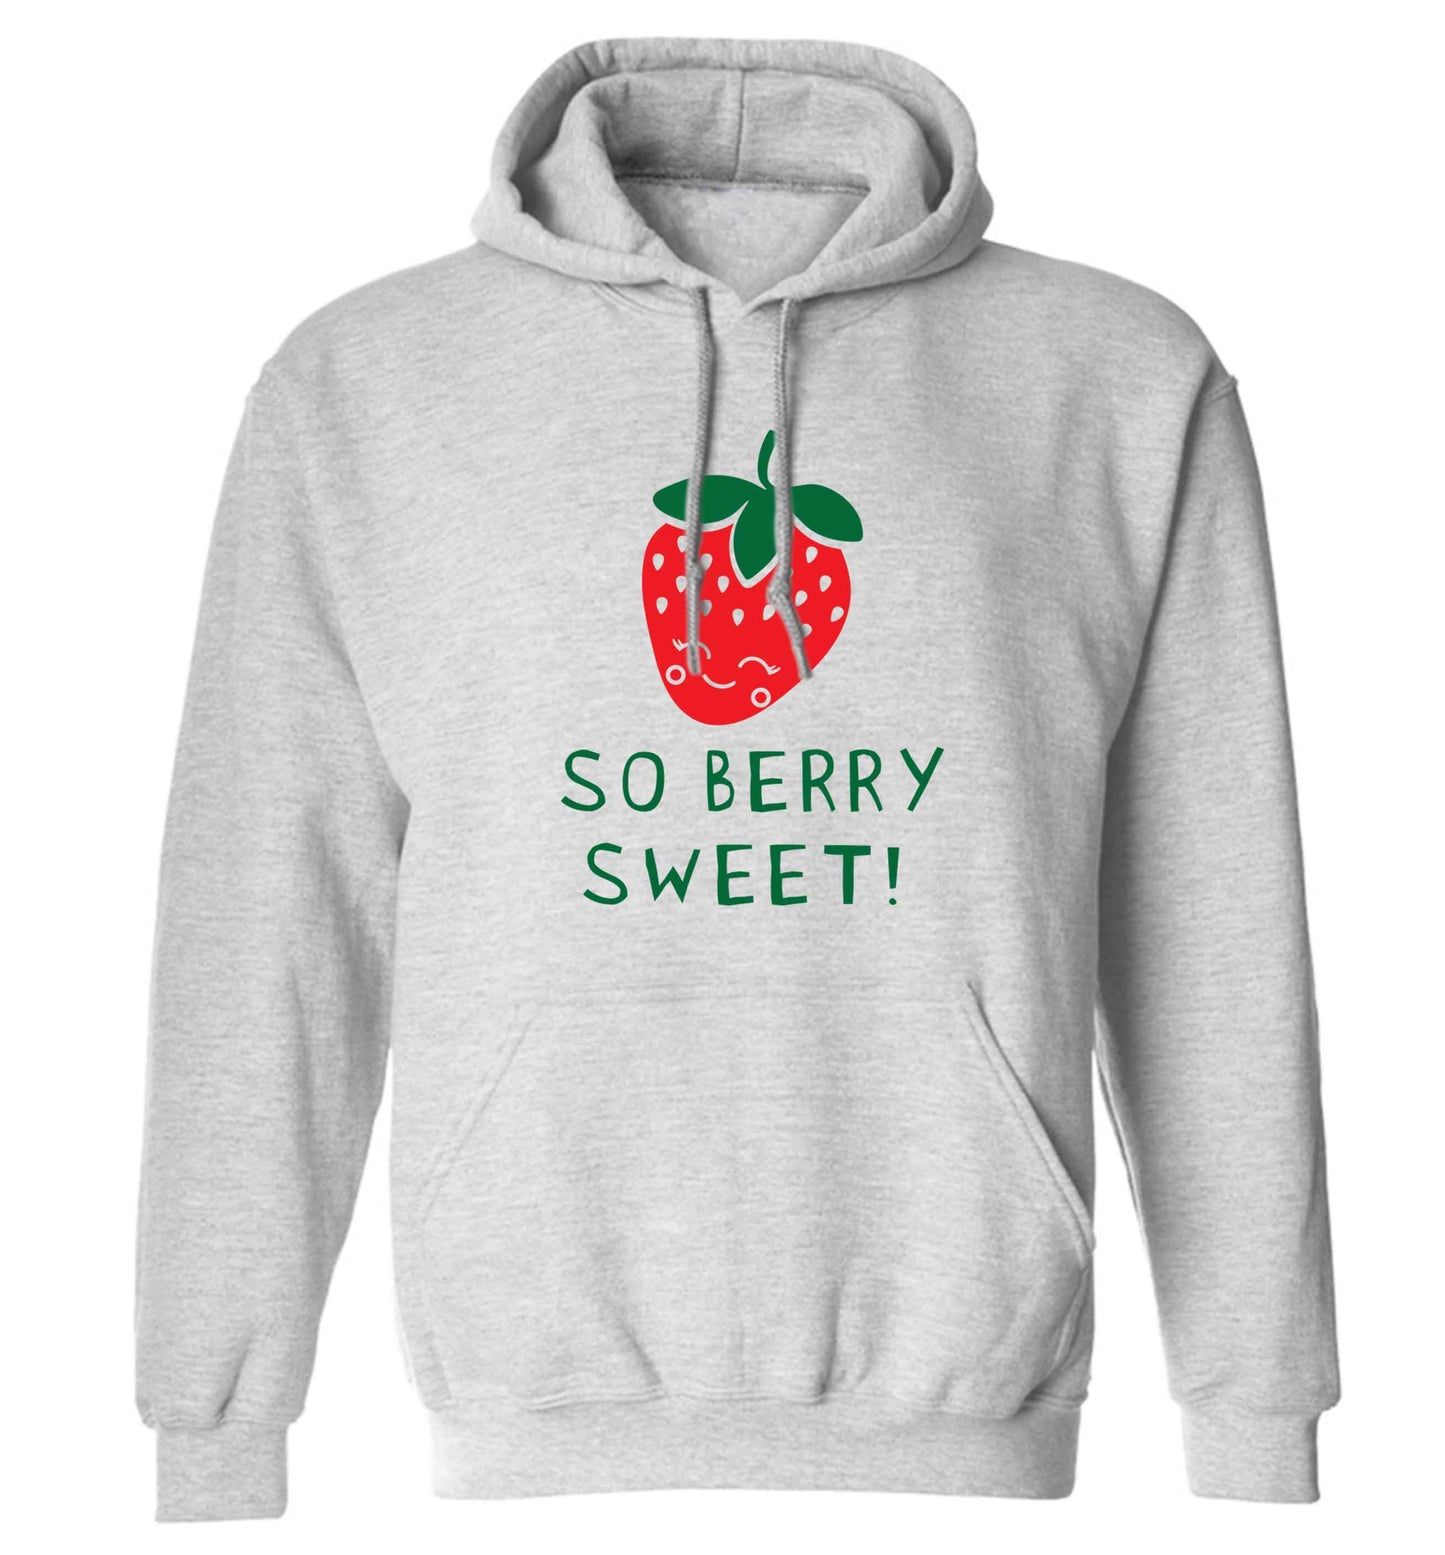 So berry sweet adults unisex grey hoodie 2XL